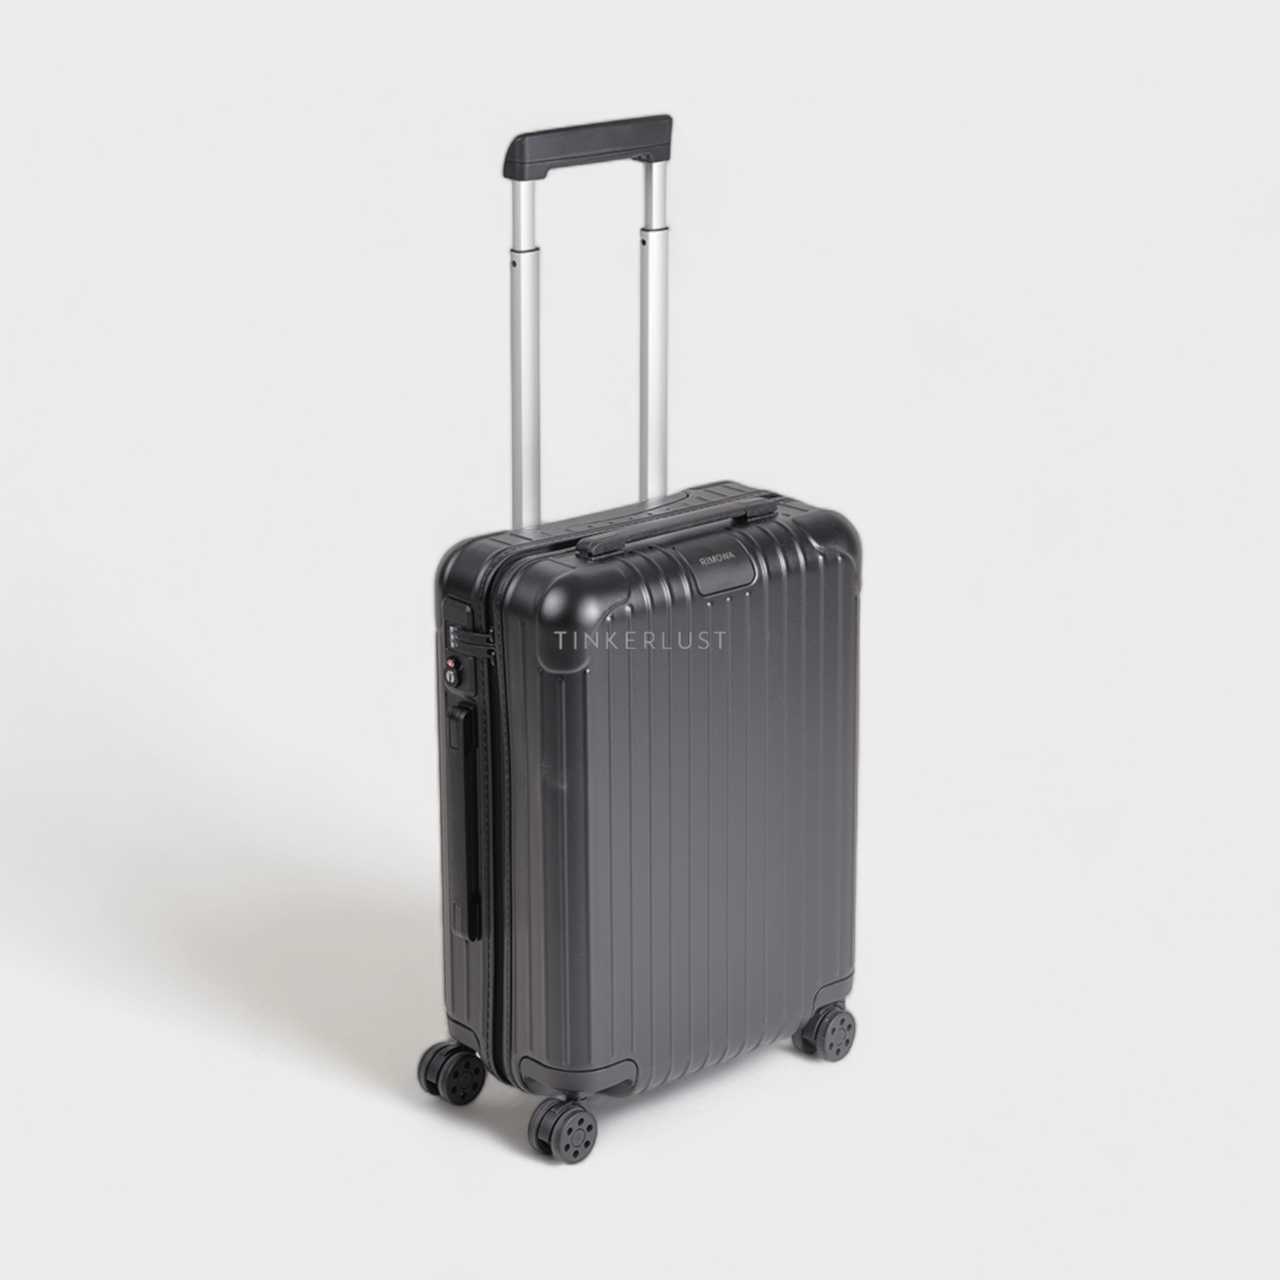 Rimowa Cabin S Suitcase in Black Matte Polycarbonate Travel